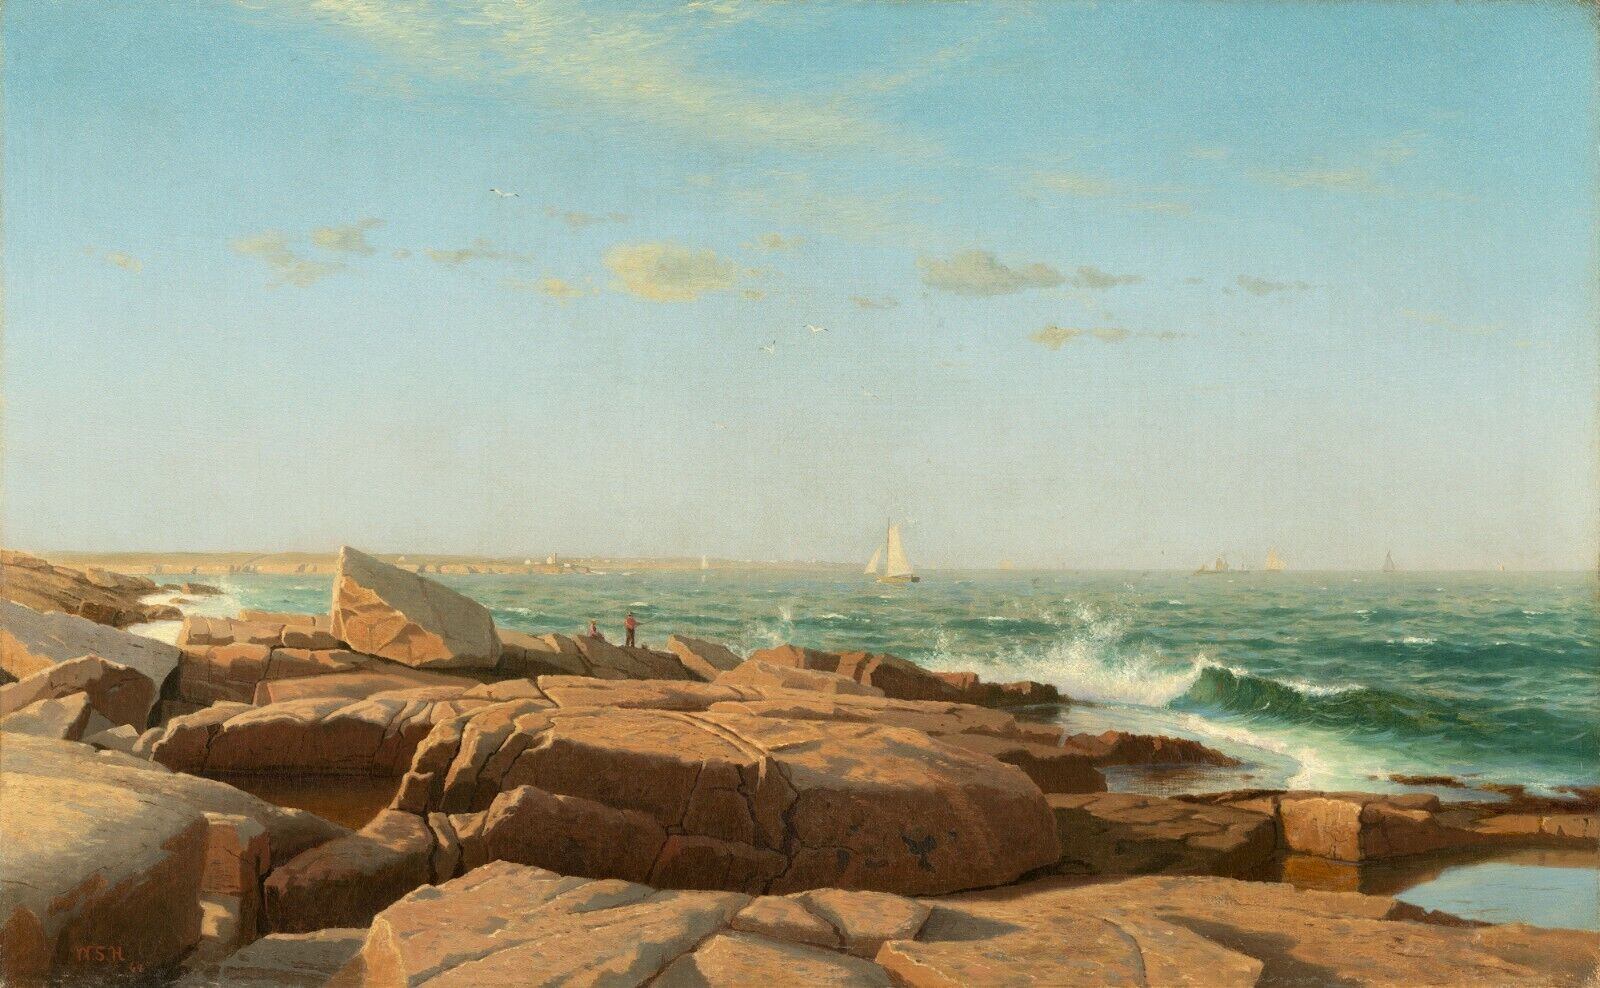 Narragansett Bay : William Stanley Haseltine : 1864 : Archival Quality Art Print